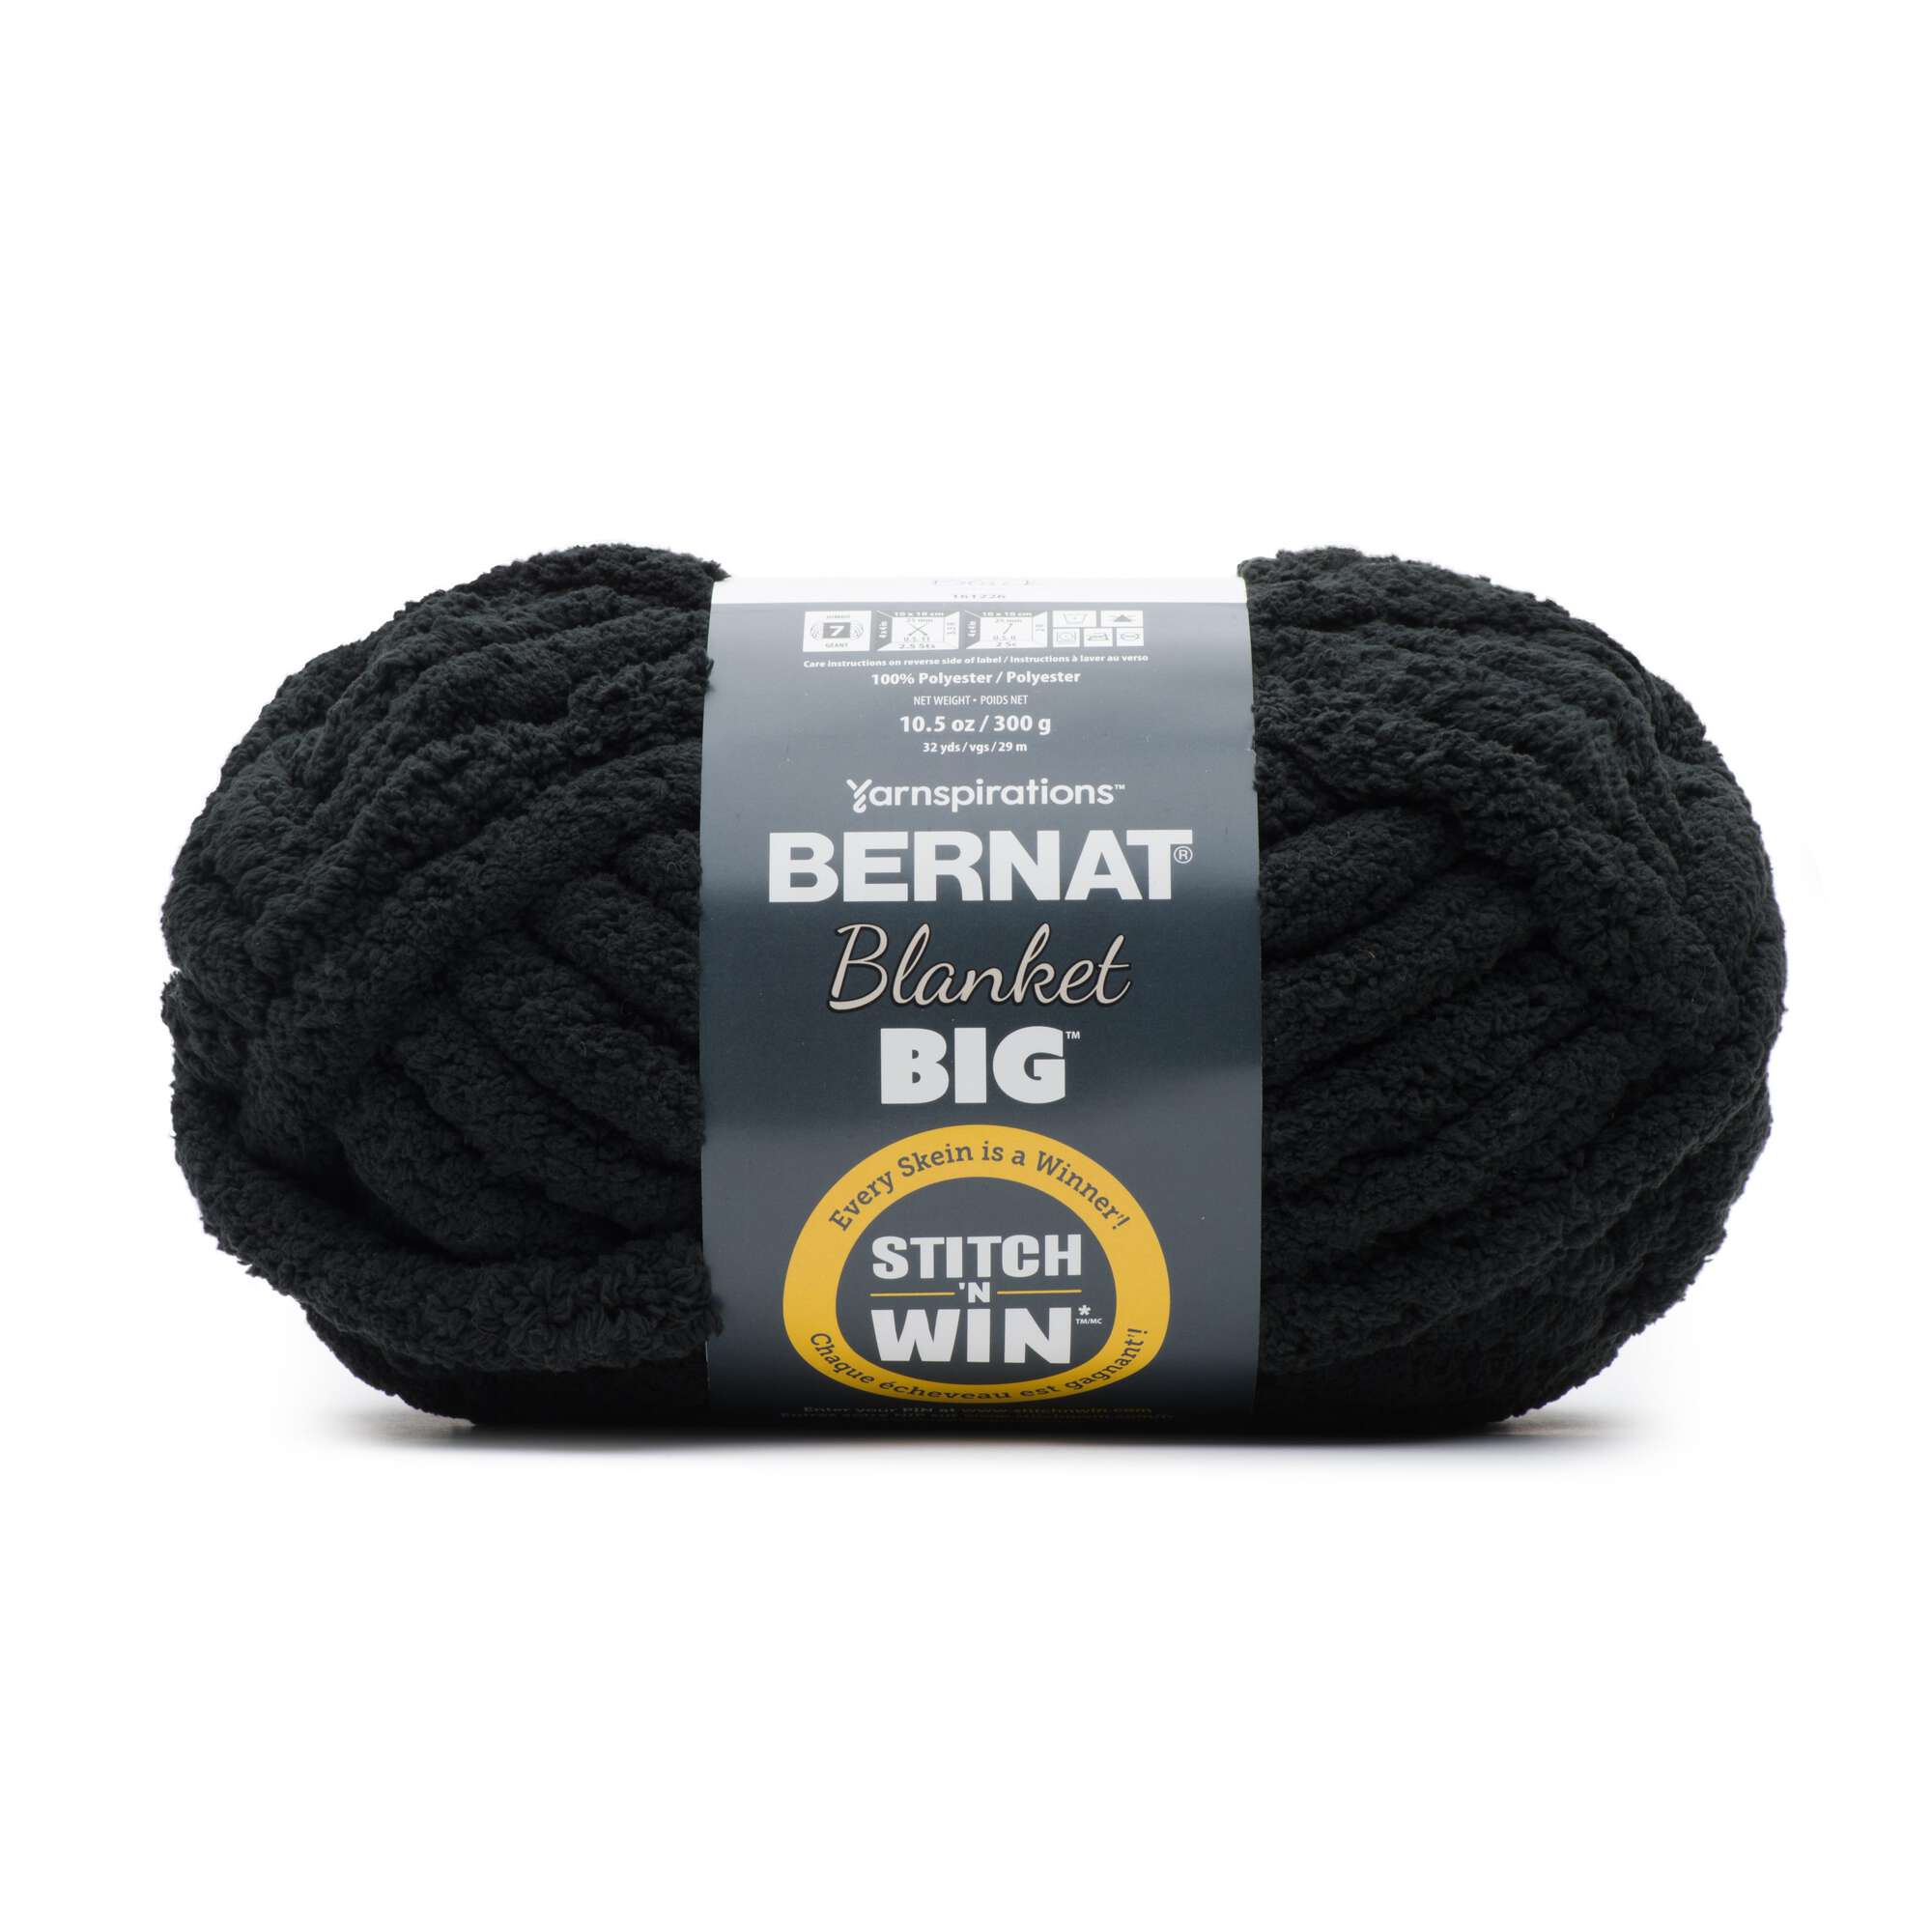 Bernat Blanket Big Yarn (300g/10.5oz) - Discontinued Shades | Yarnspirations